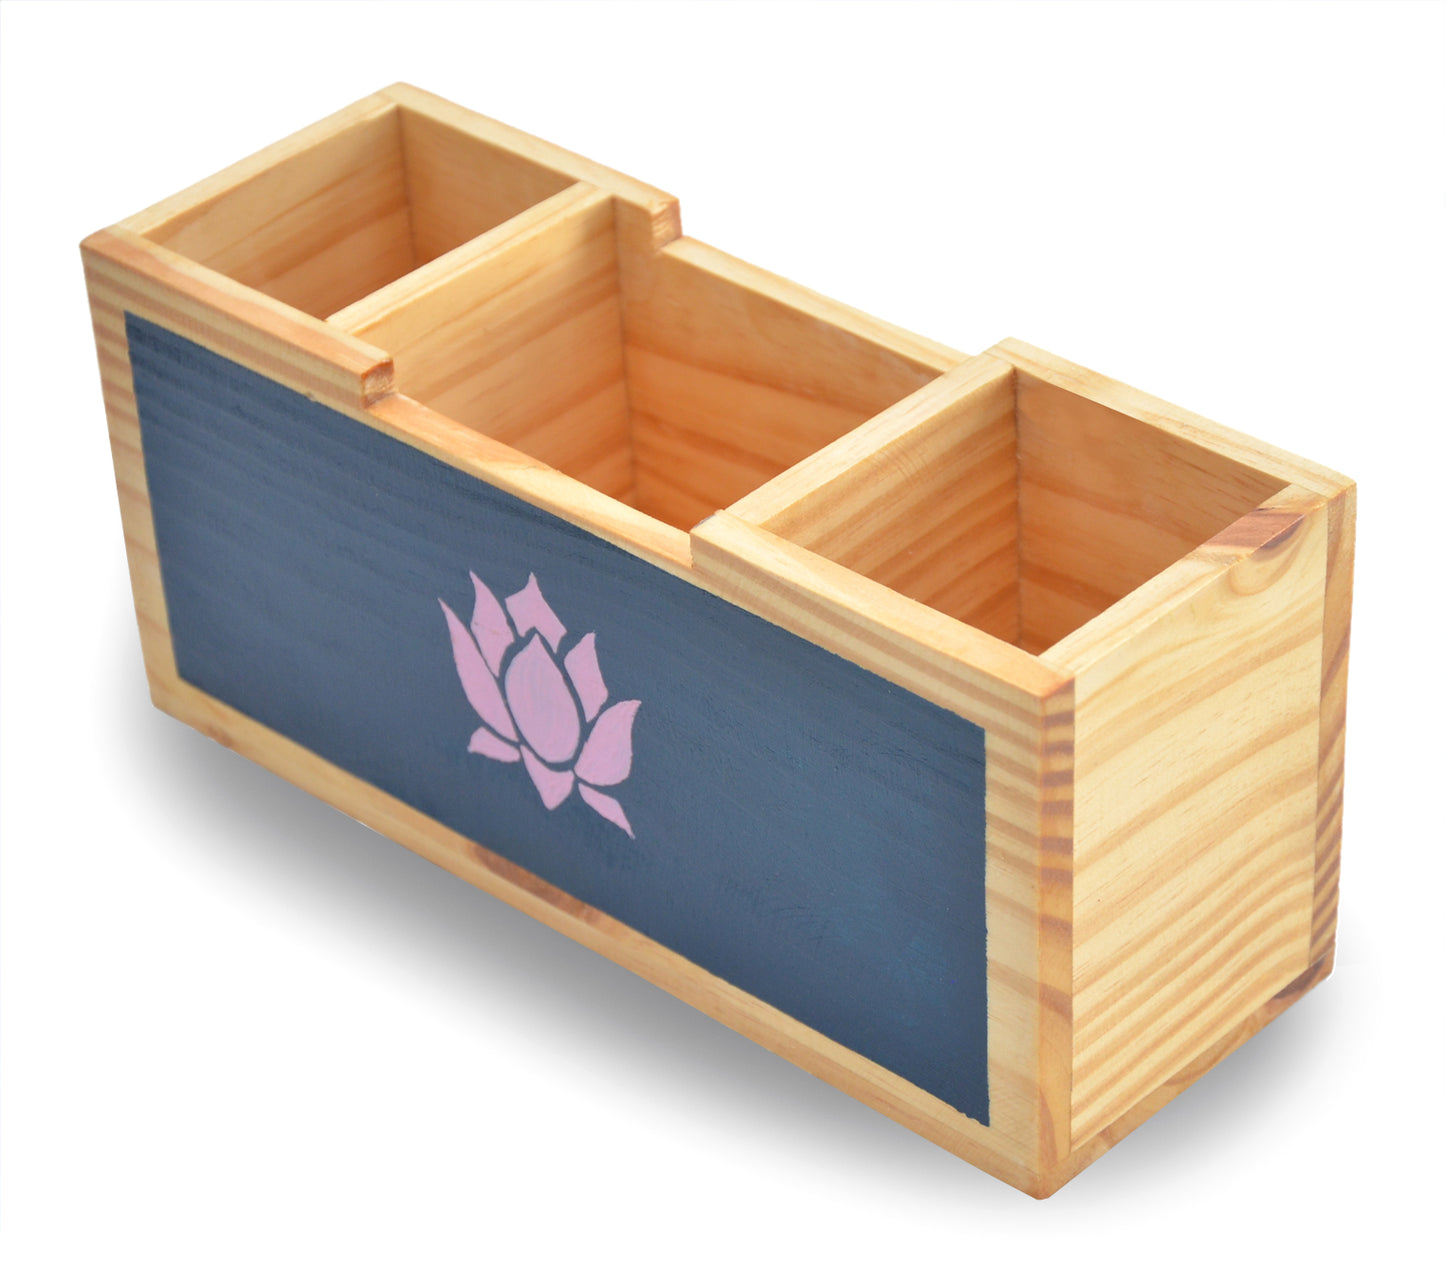 Blooming Lotus Hand Painted Wooden Desk Organizer